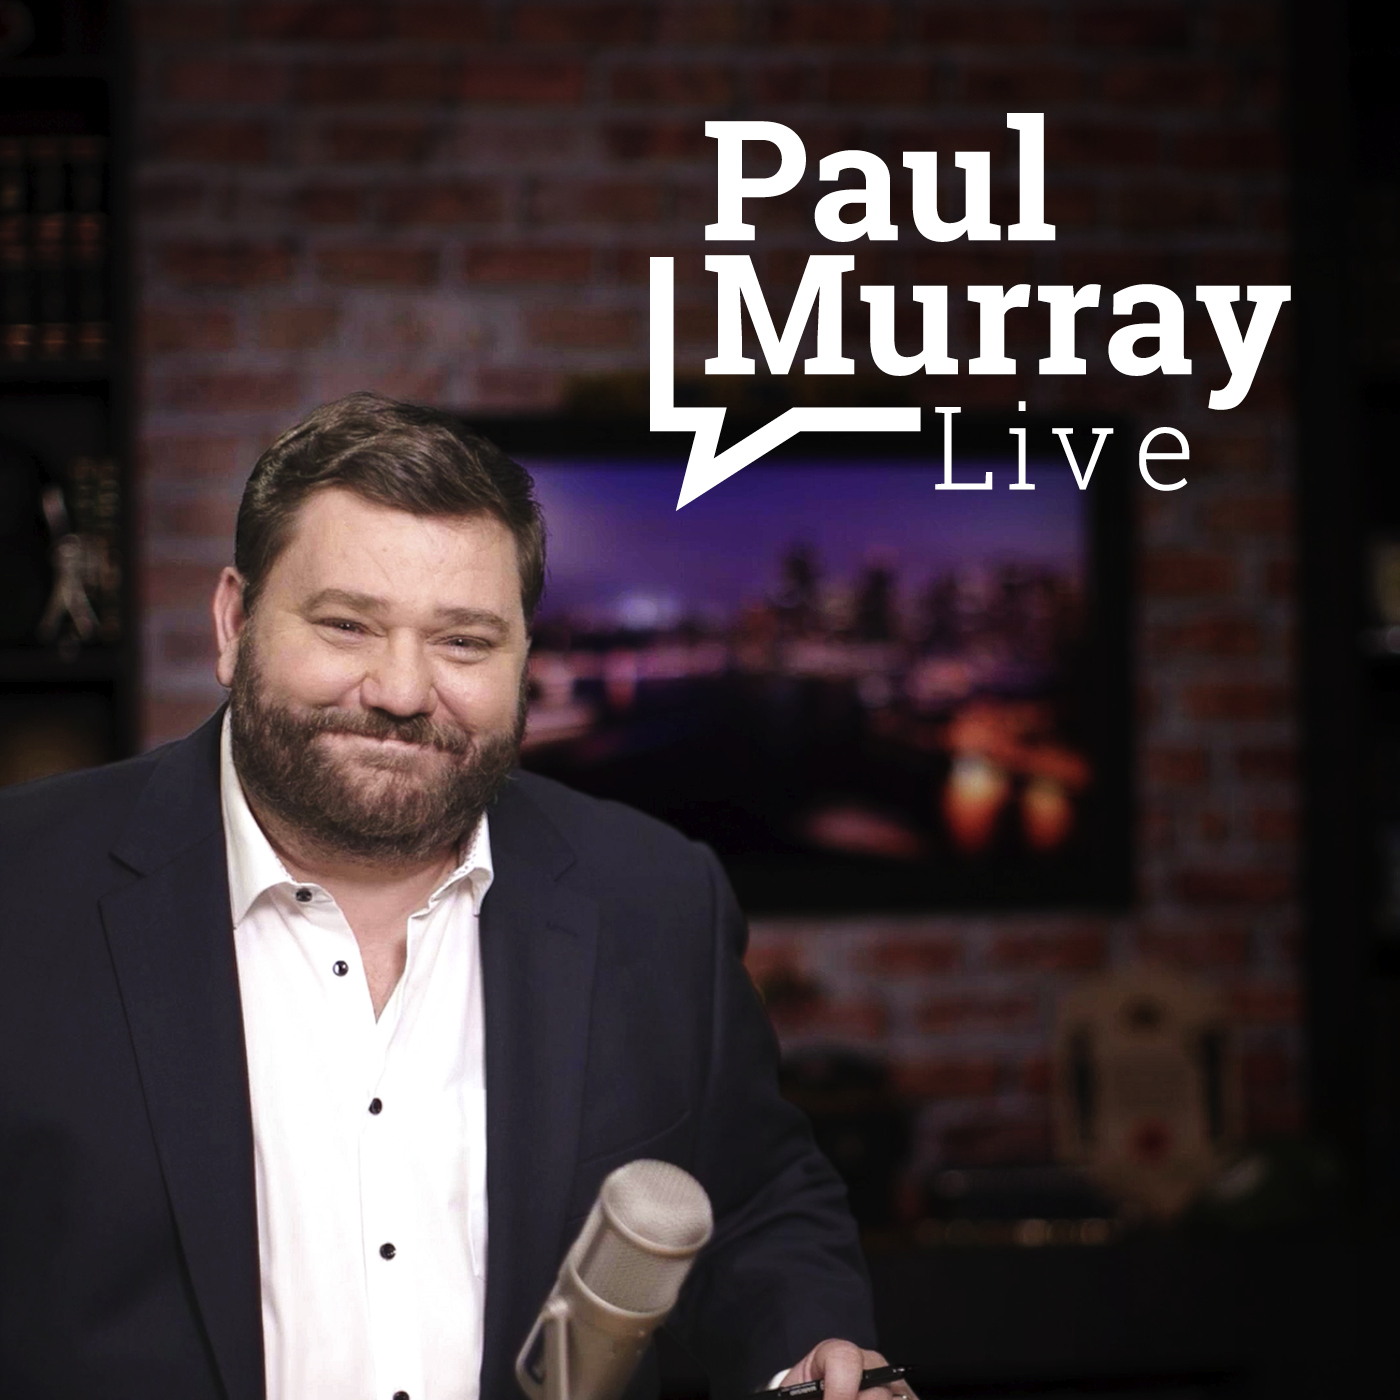 Paul Murray Live, Sunday 31st May